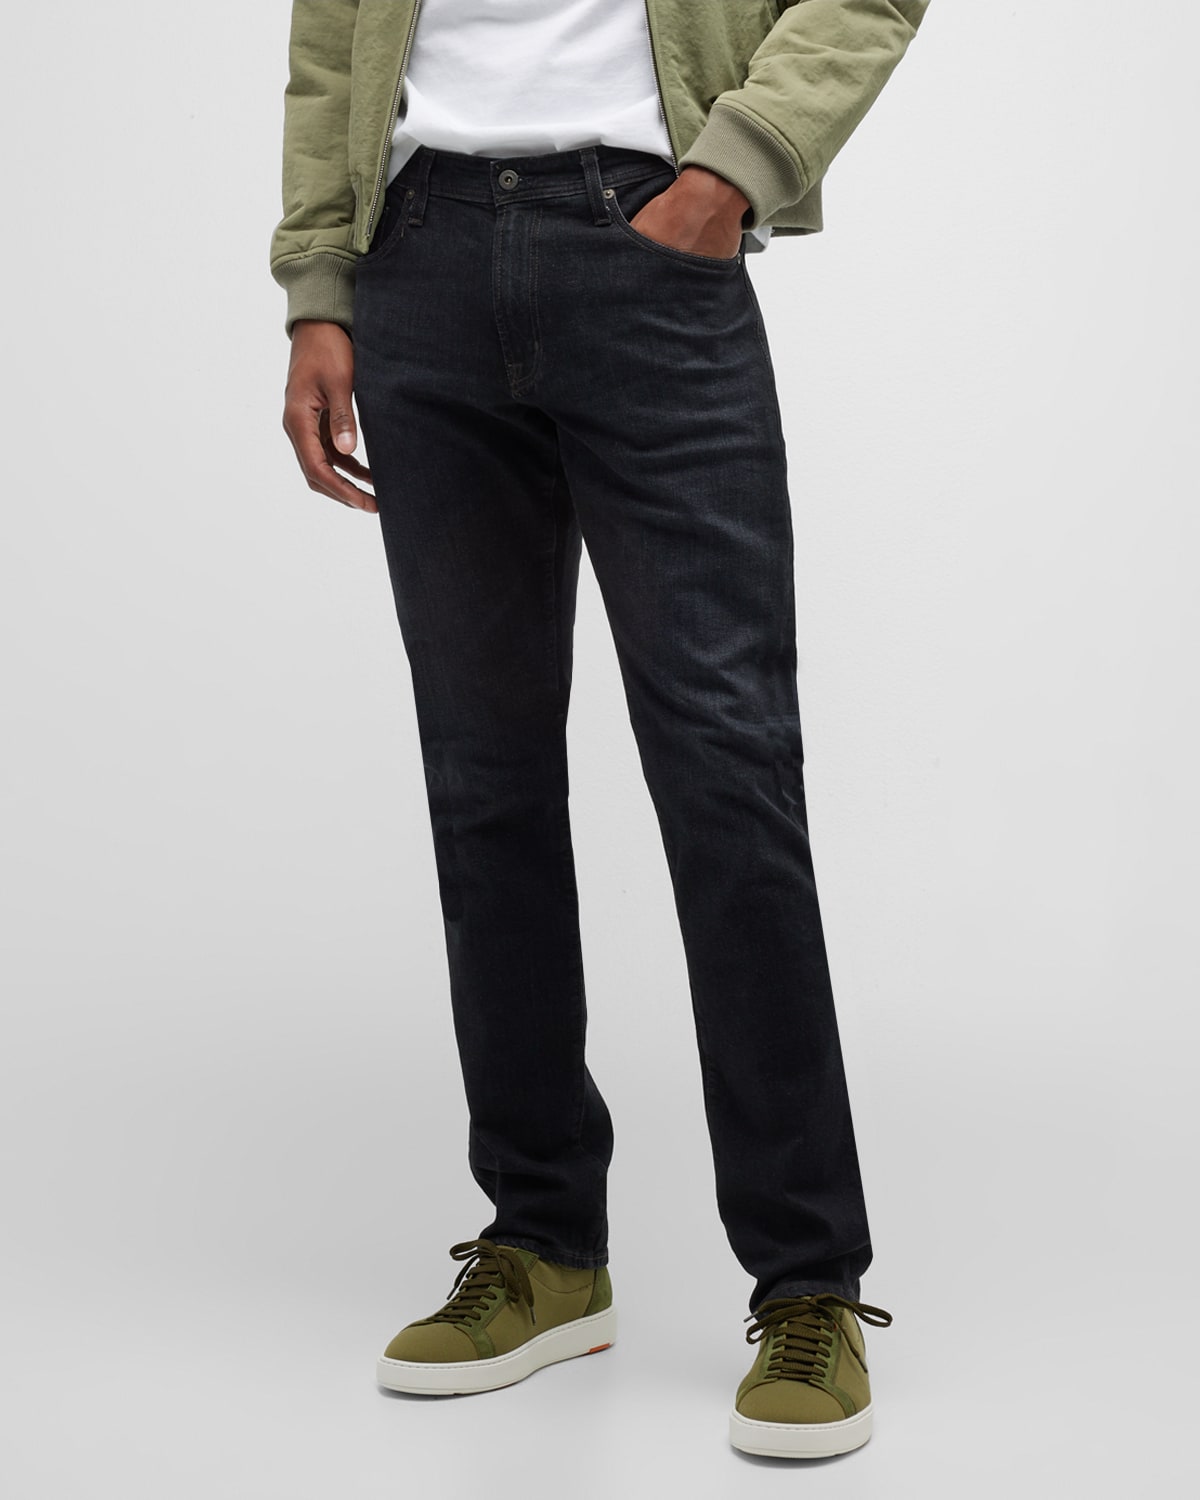 AG Adriano Goldschmied Men's Everett Slim-Straight Jeans